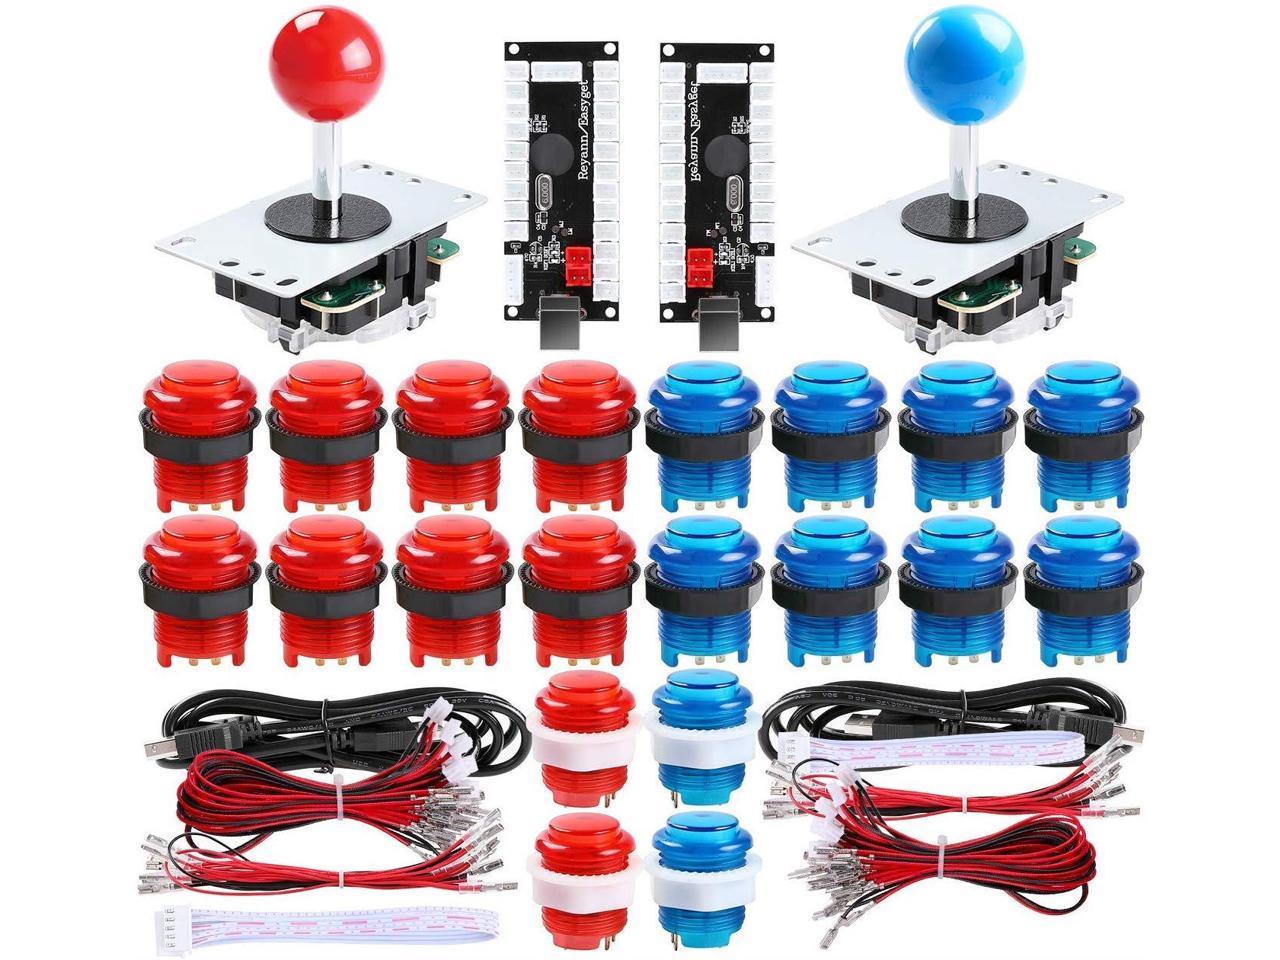 Hikig 2 Player Arcade Game DIY Parts USB PC Joystick Color Red Blue Kits 